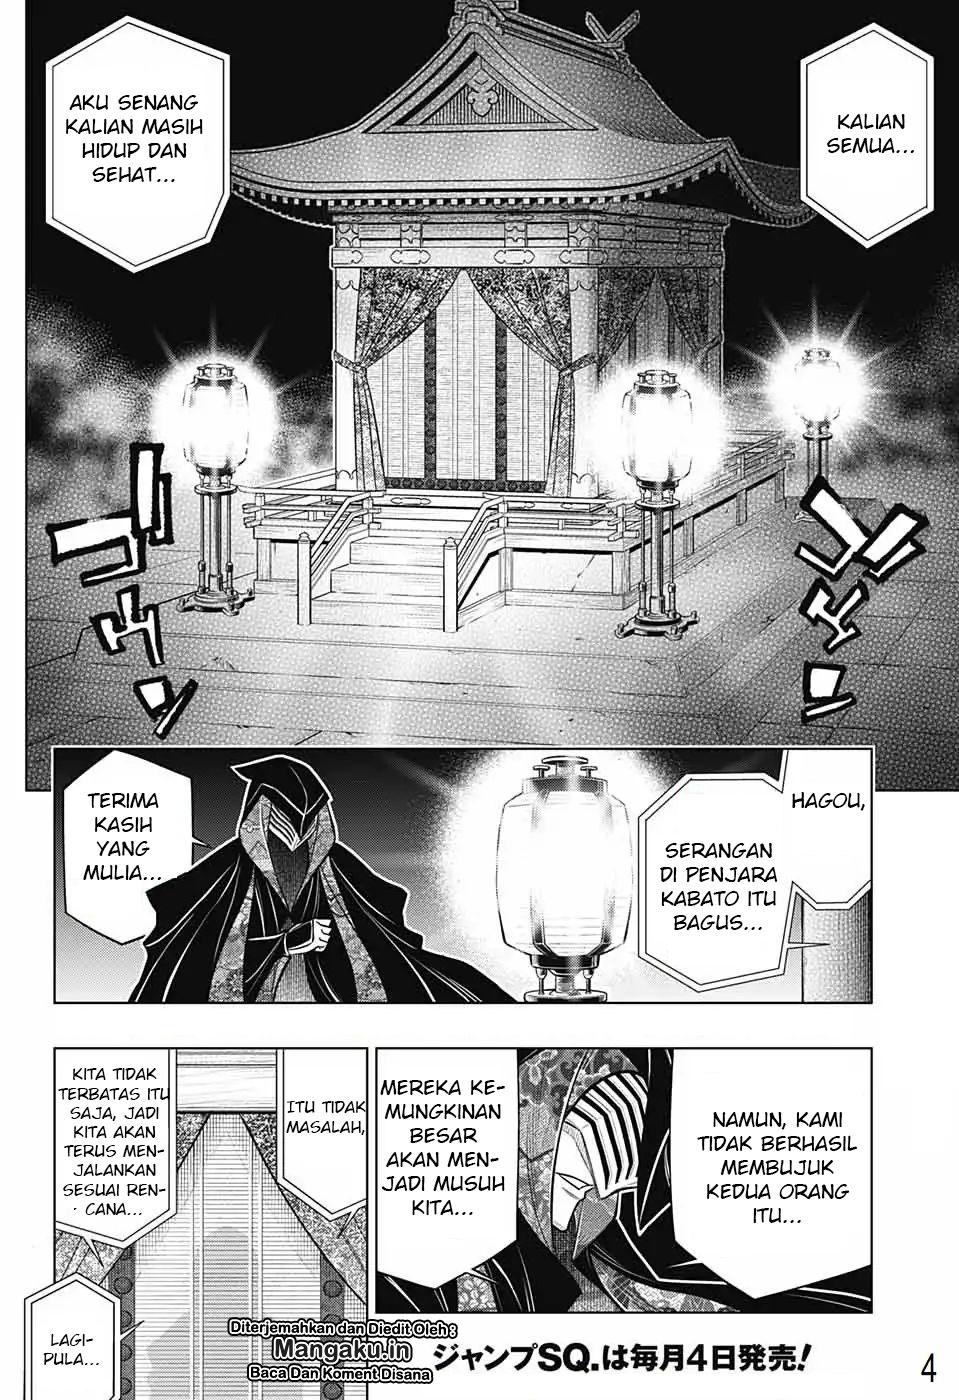 Rurouni Kenshin: Meiji Kenkaku Romantan: Hokkaidou Hen Chapter 15